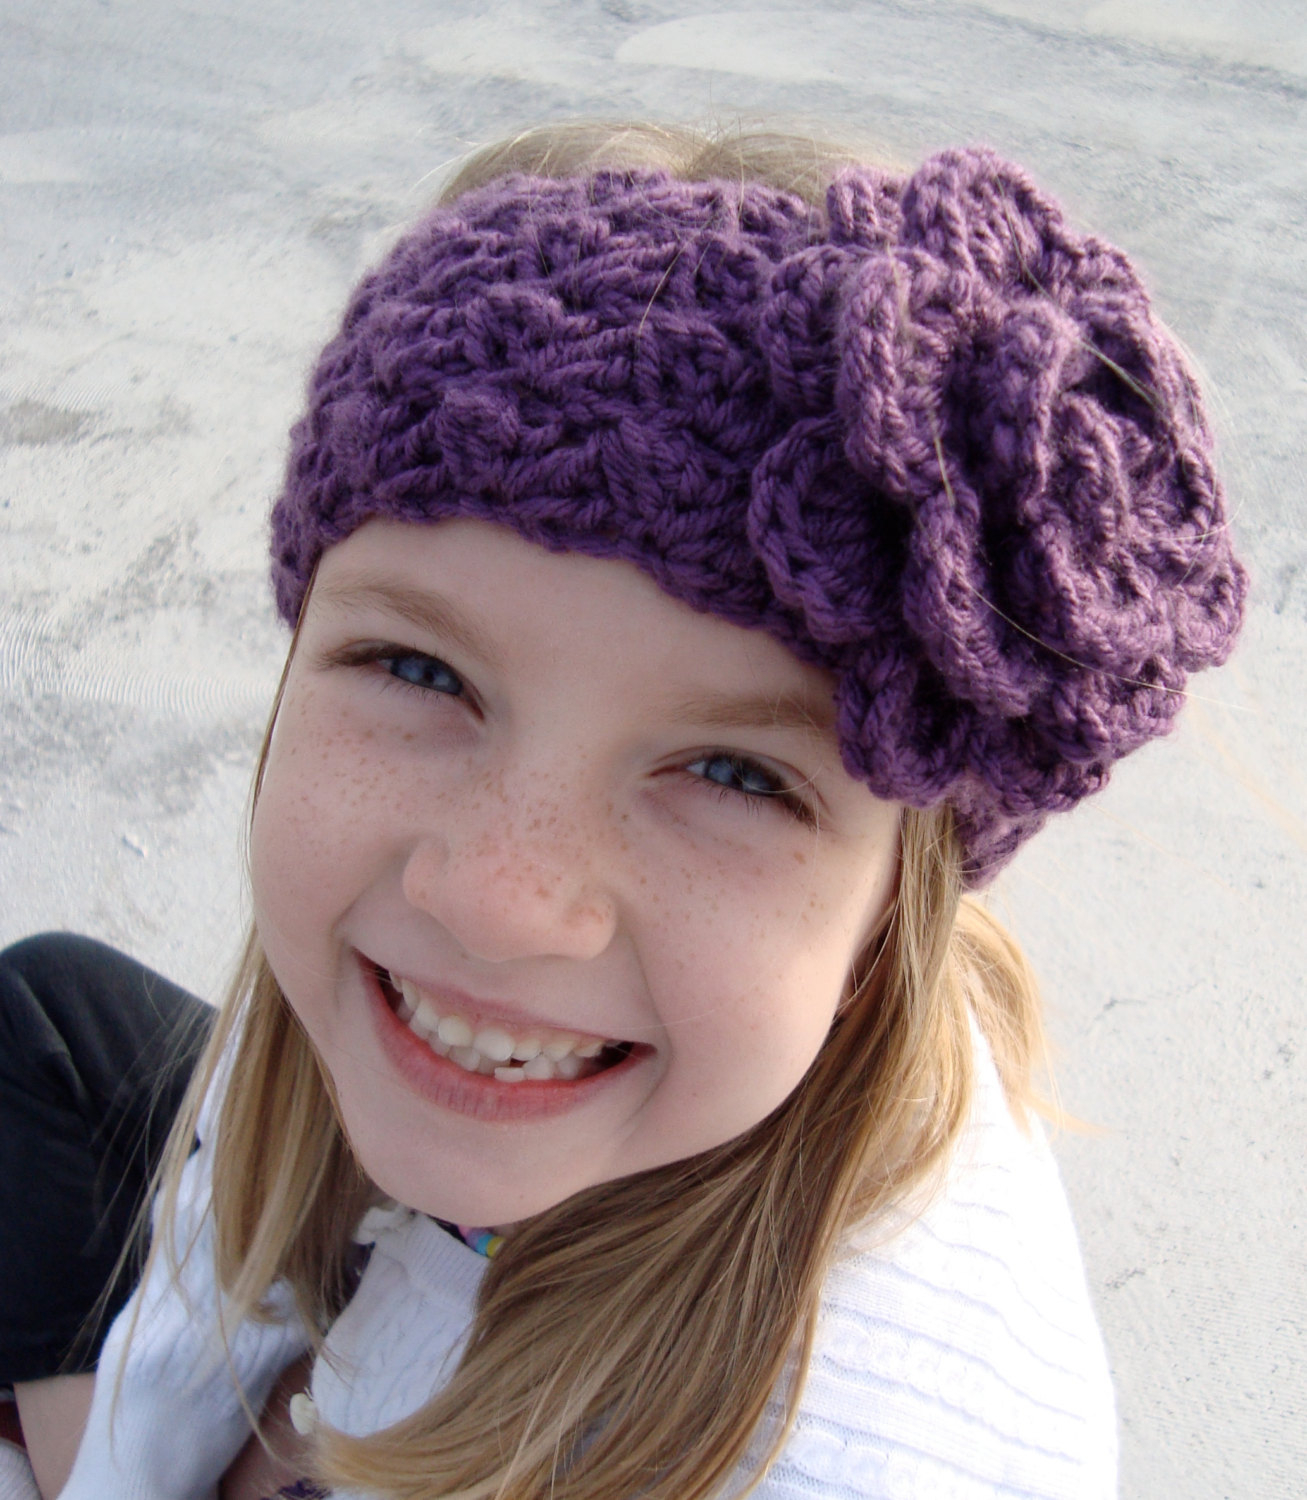 Knit Headband Pattern With Flower Girls Crochet Headbands For All Crochet And Knitting Patterns 2019